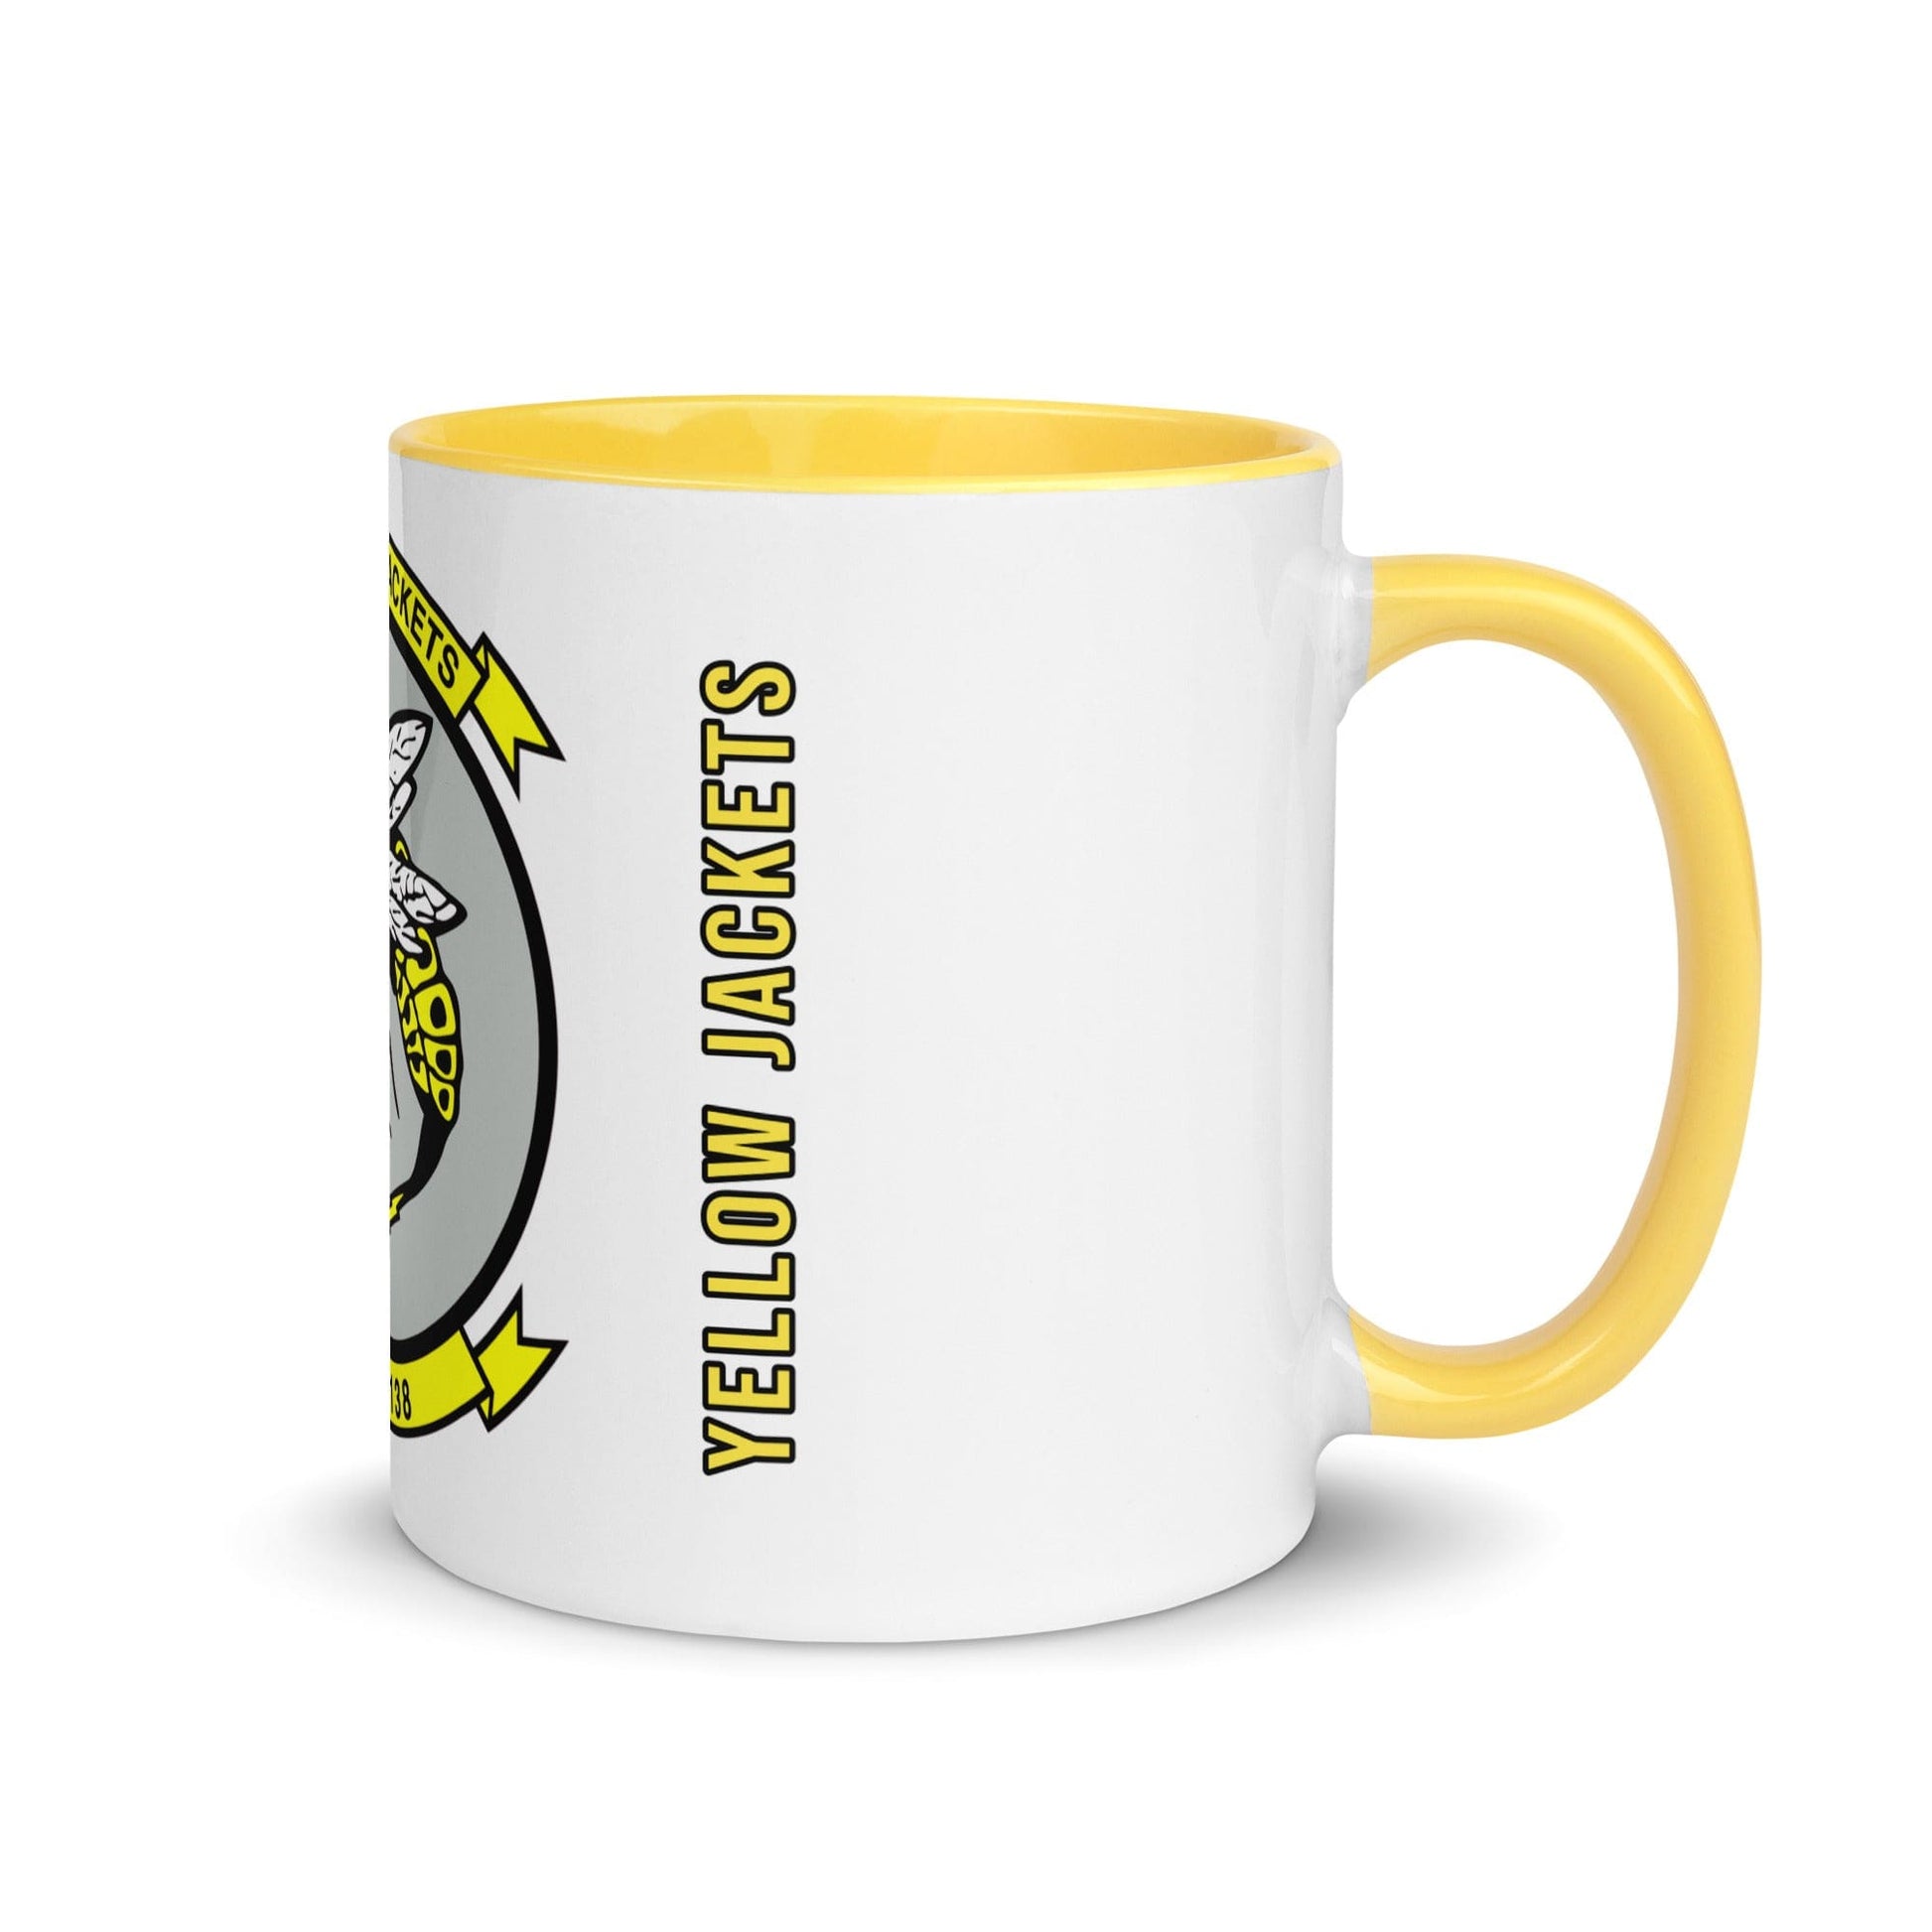 VAQ-138 "Yellow Jackets" Mug